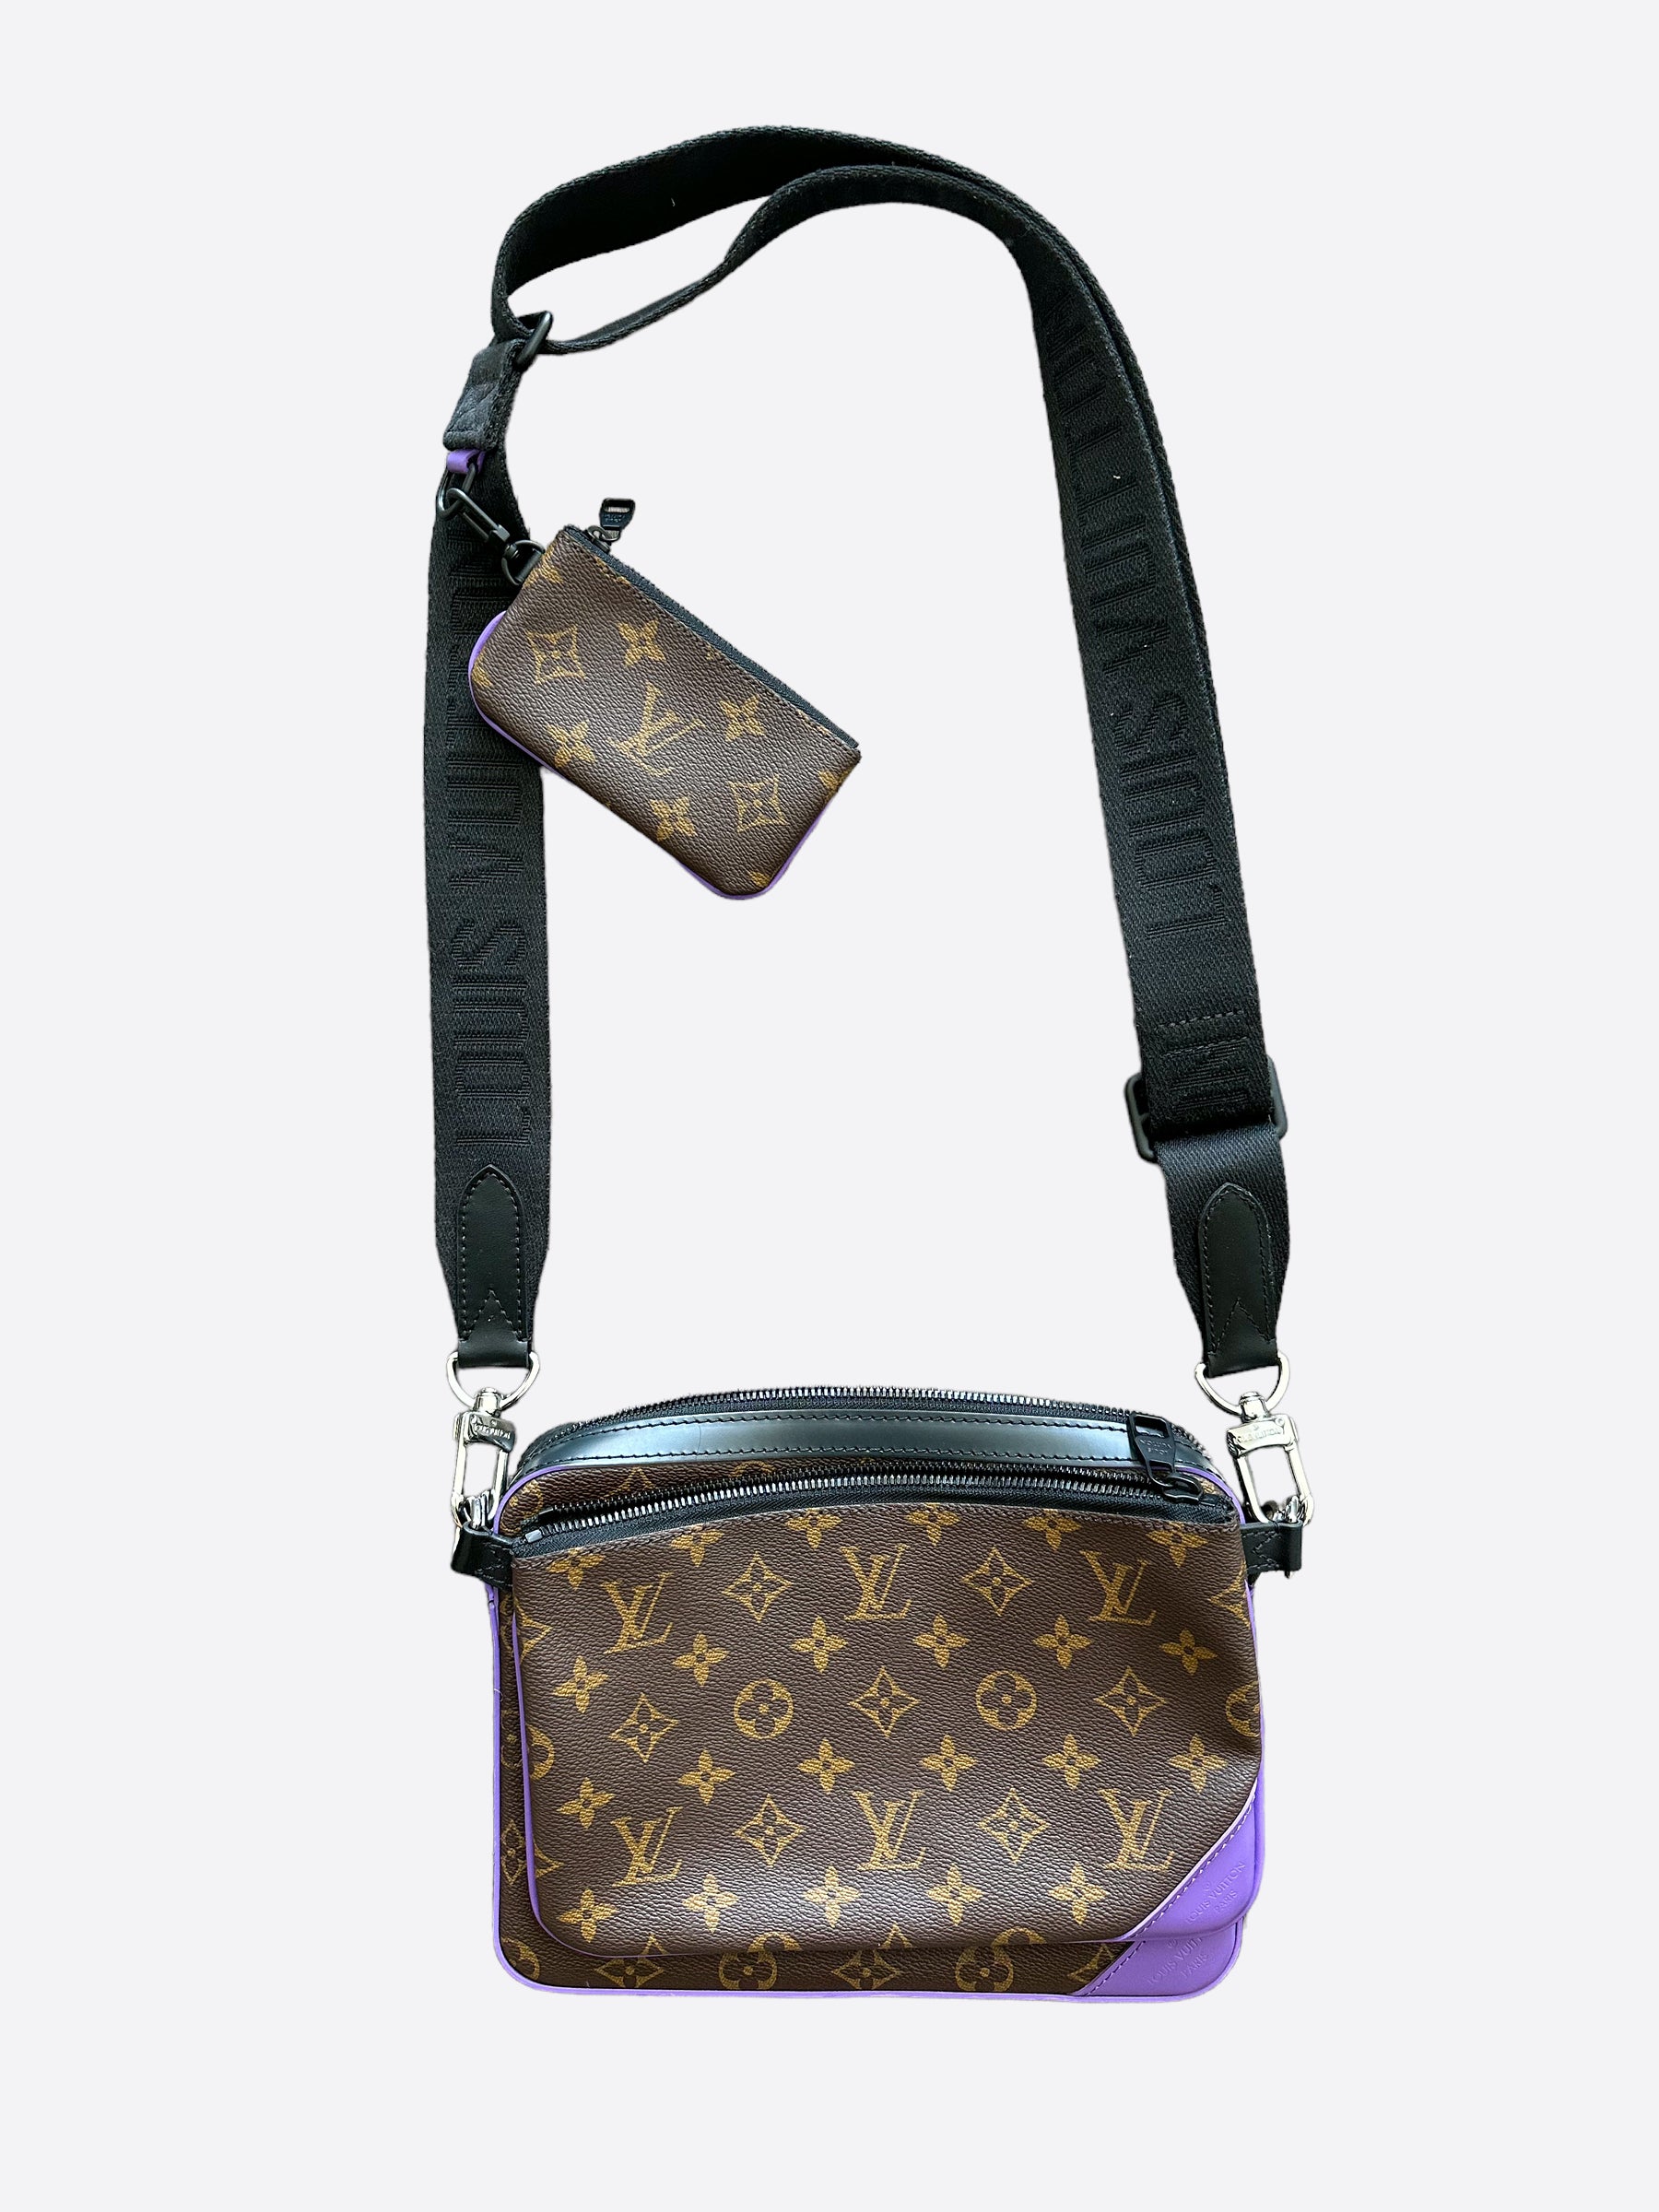 Monogram Louis Vuittons Handbag, Messanger Bag